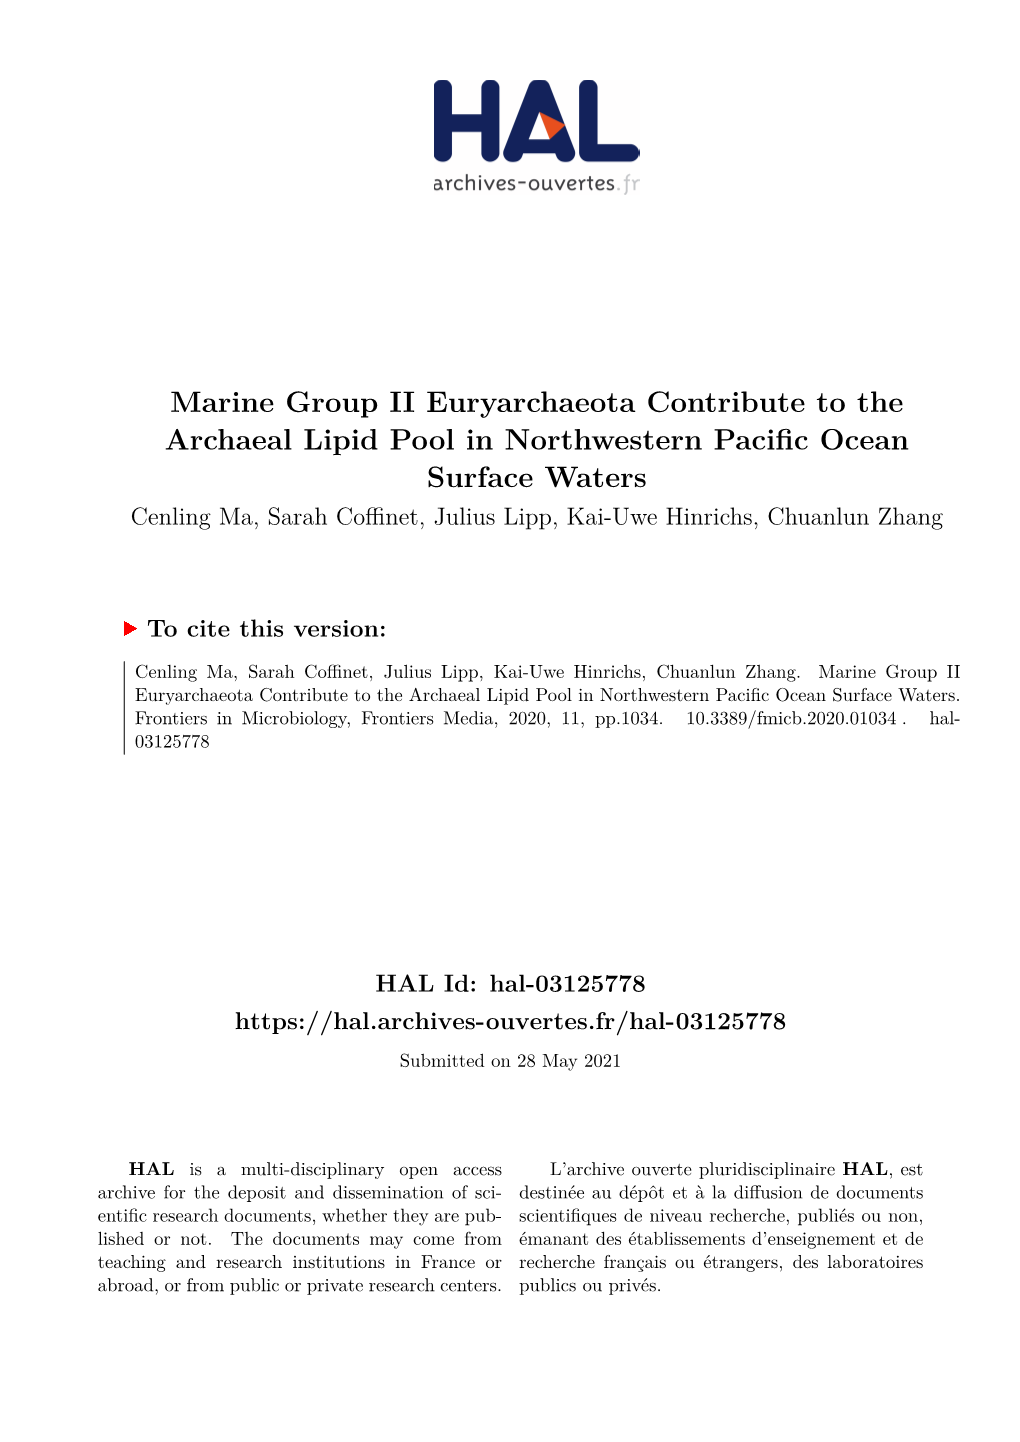 Marine Group II Euryarchaeota Contribute to the Archaeal Lipid